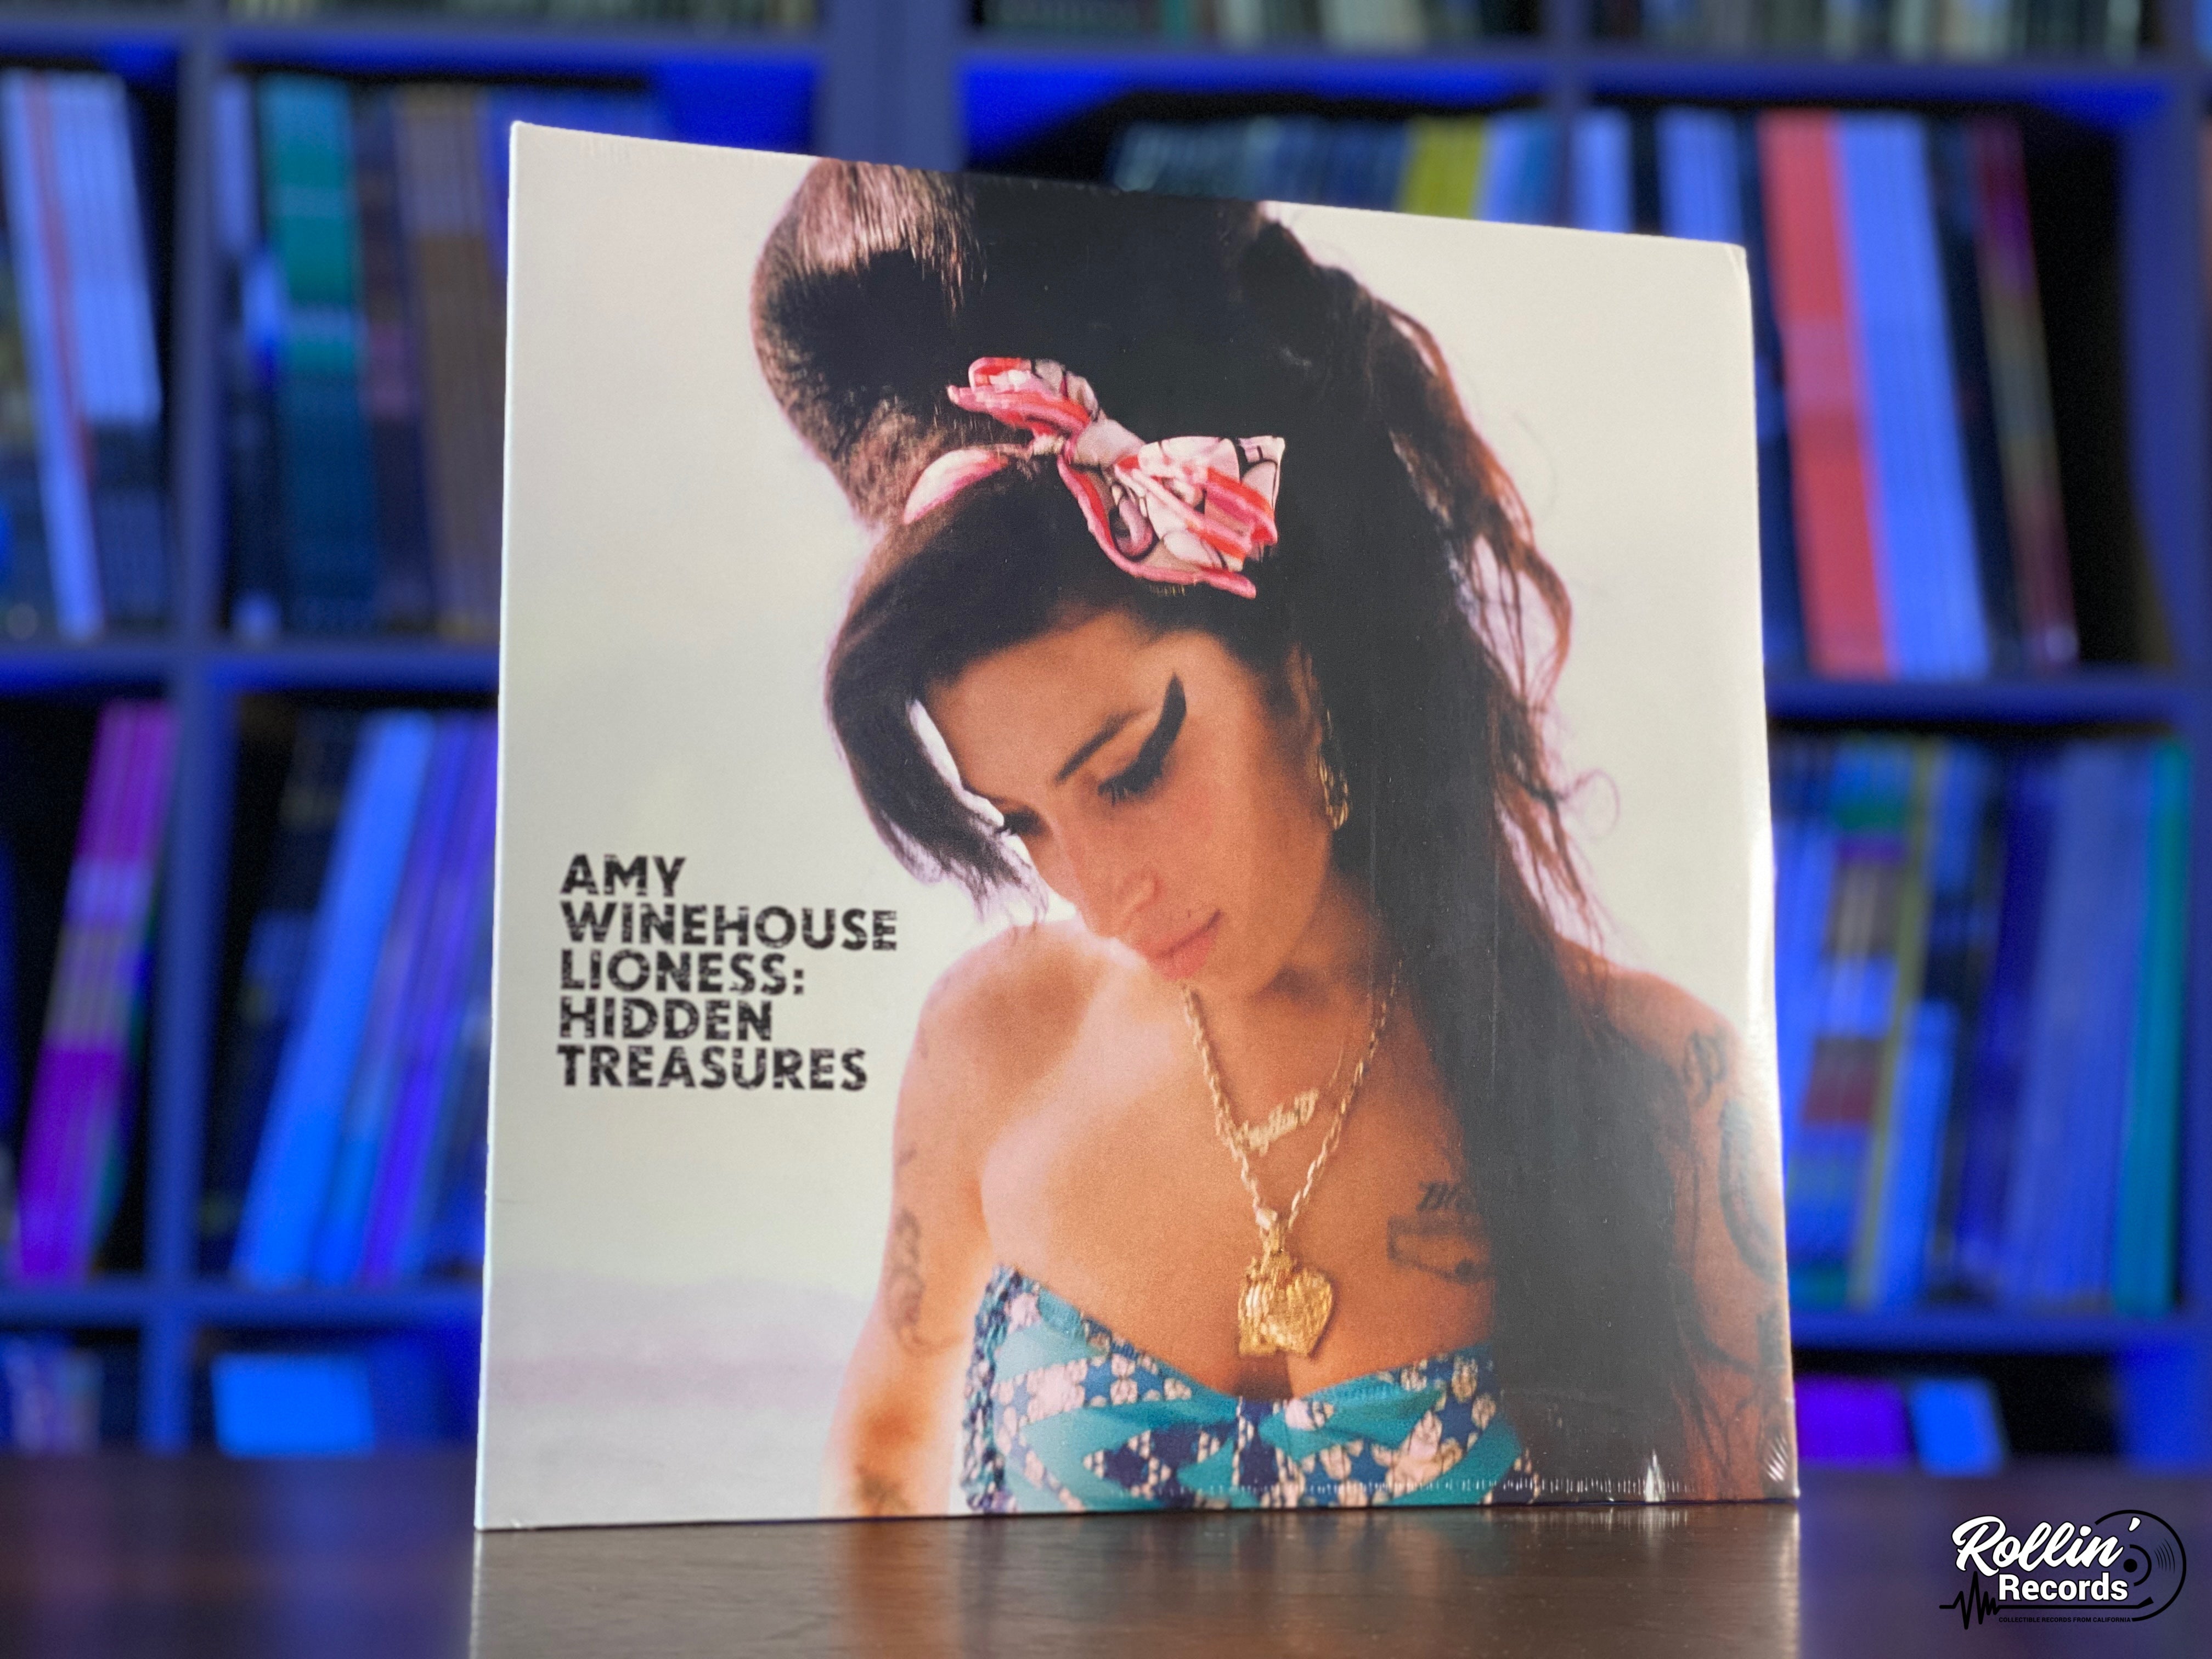 Amy Winehouse, Lioness Hidden Treast, Vinilo